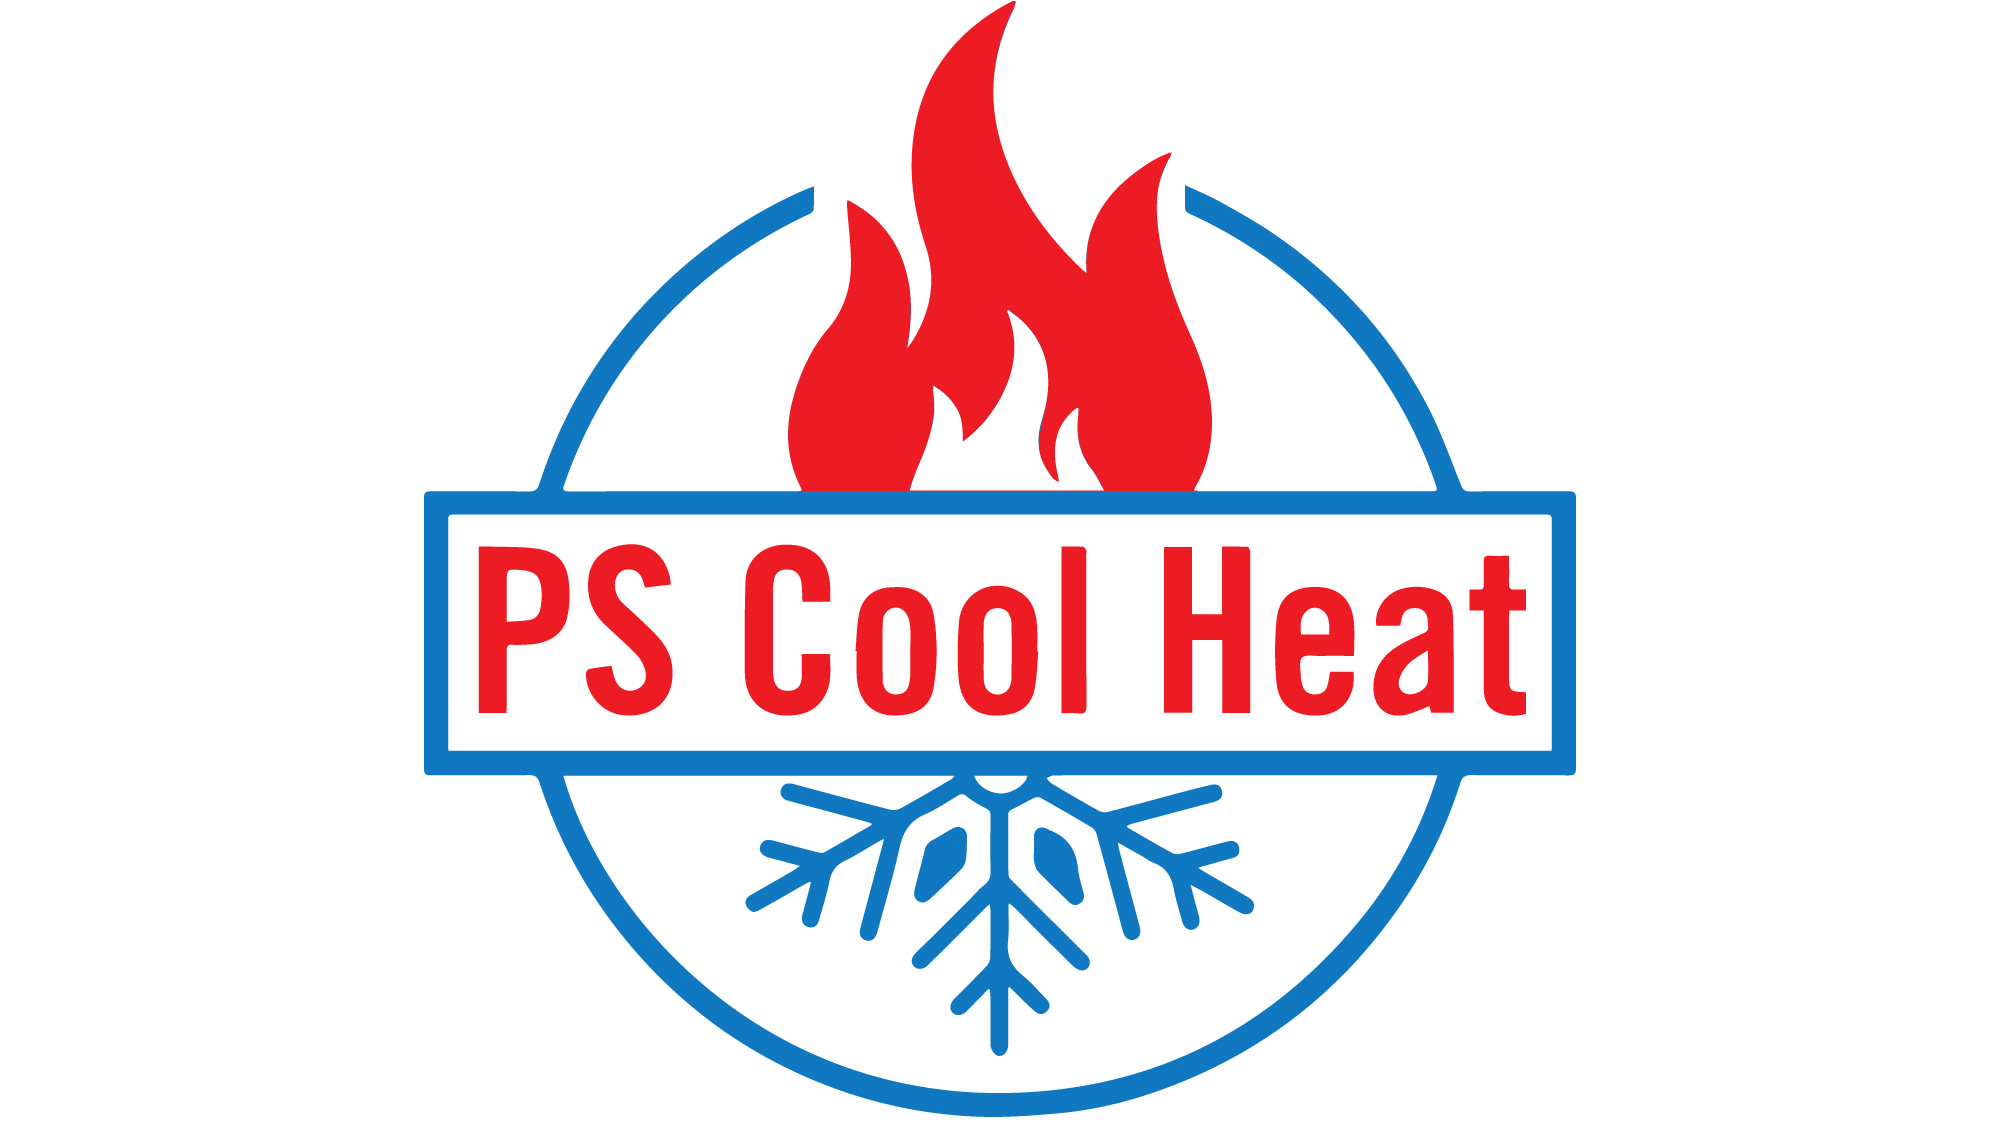 PS Cool Heat